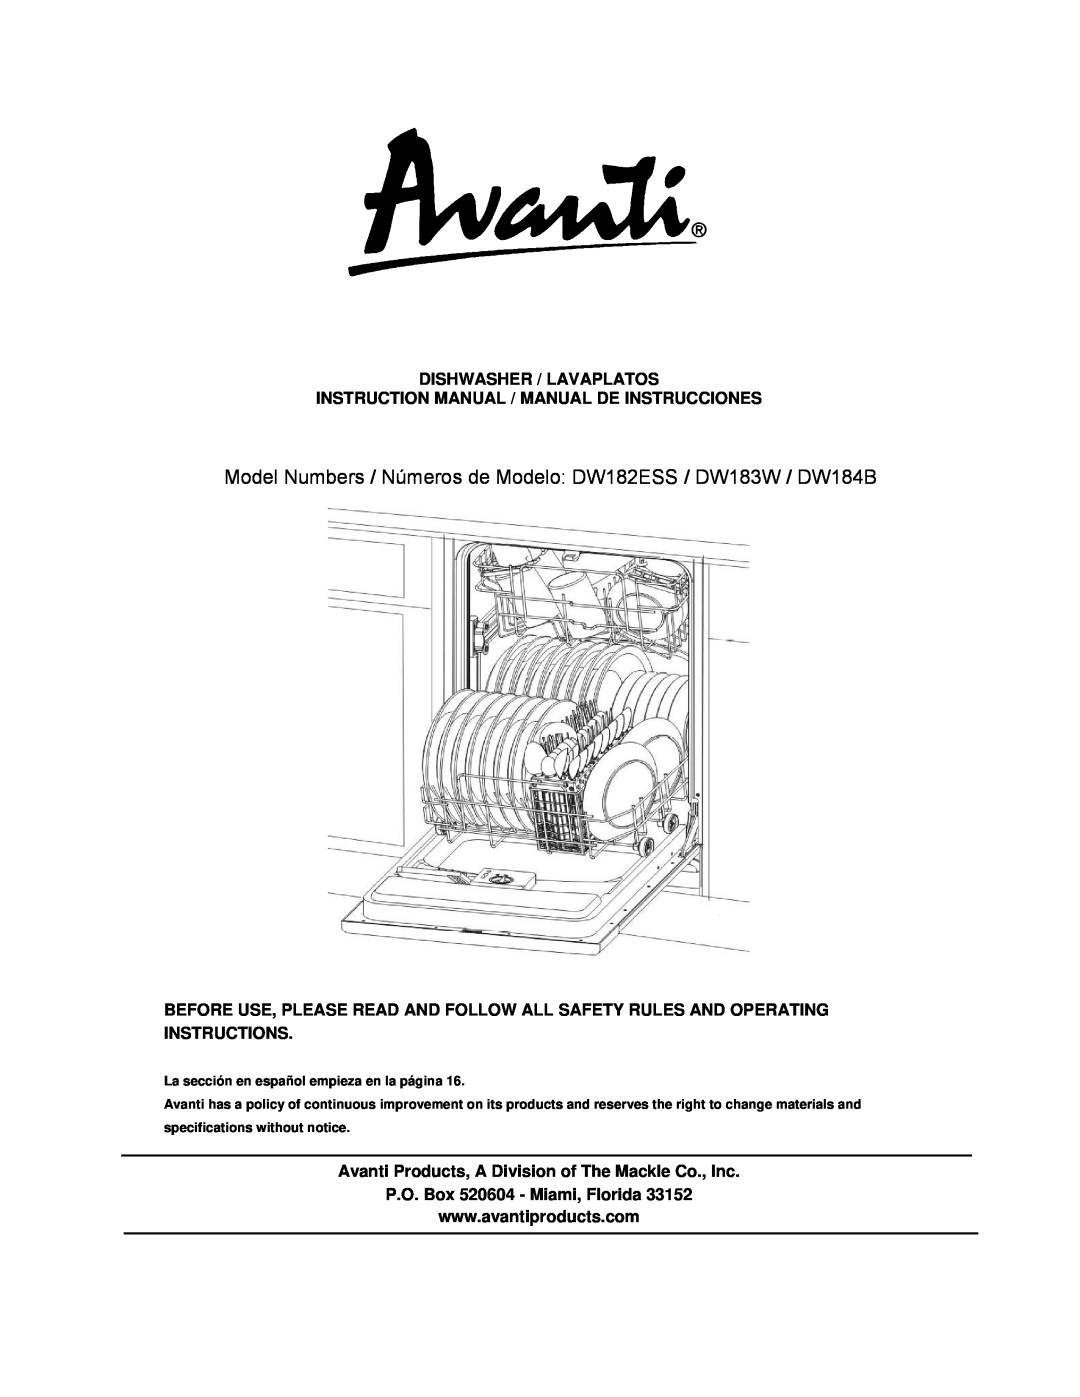 Avanti DW183W, DW184B, DW182ESS instruction manual Dishwasher / Lavaplatos, P.O. Box 520604 - Miami, Florida 